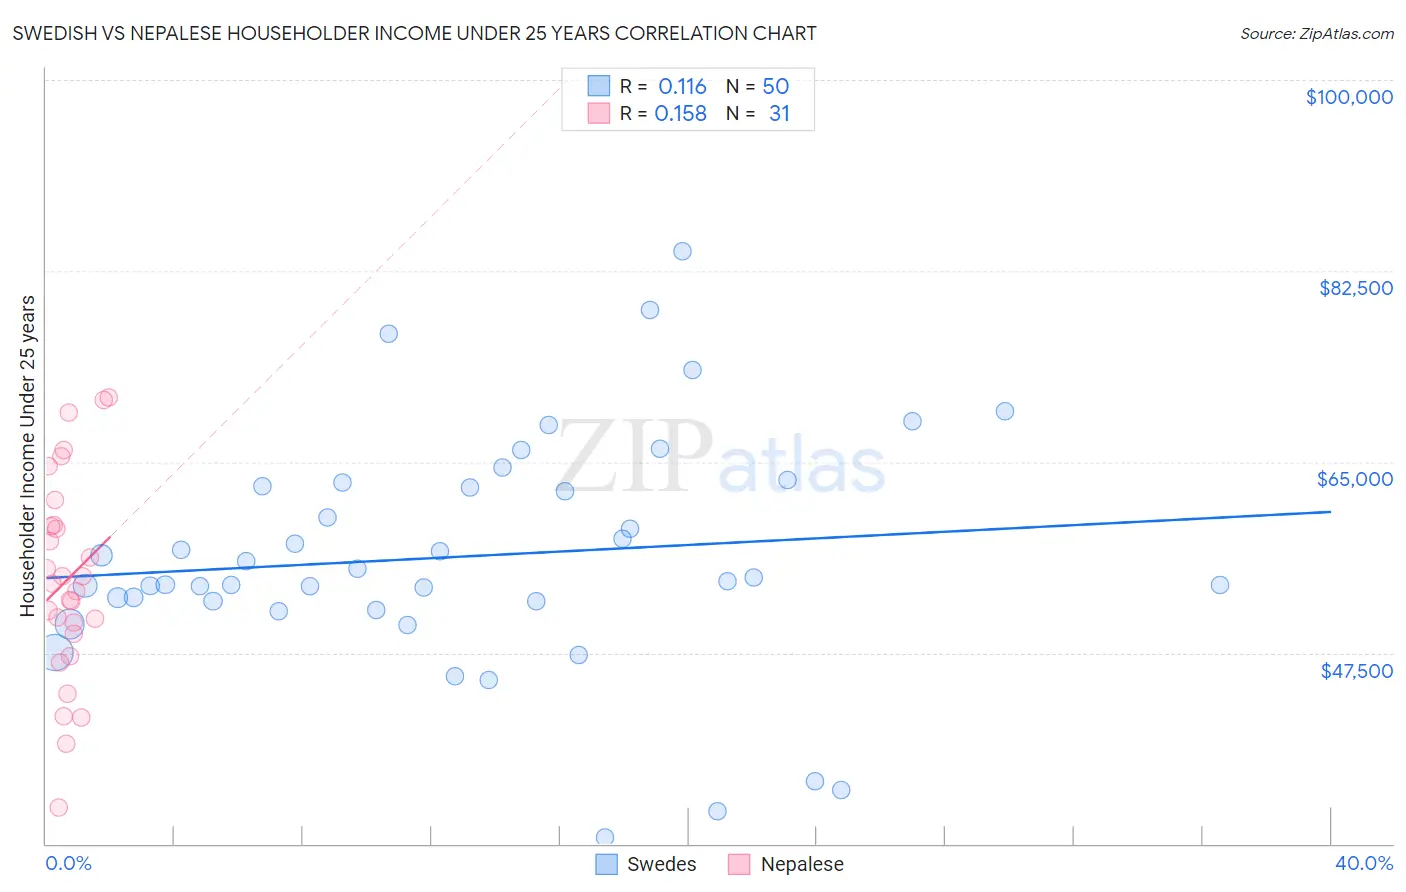 Swedish vs Nepalese Householder Income Under 25 years